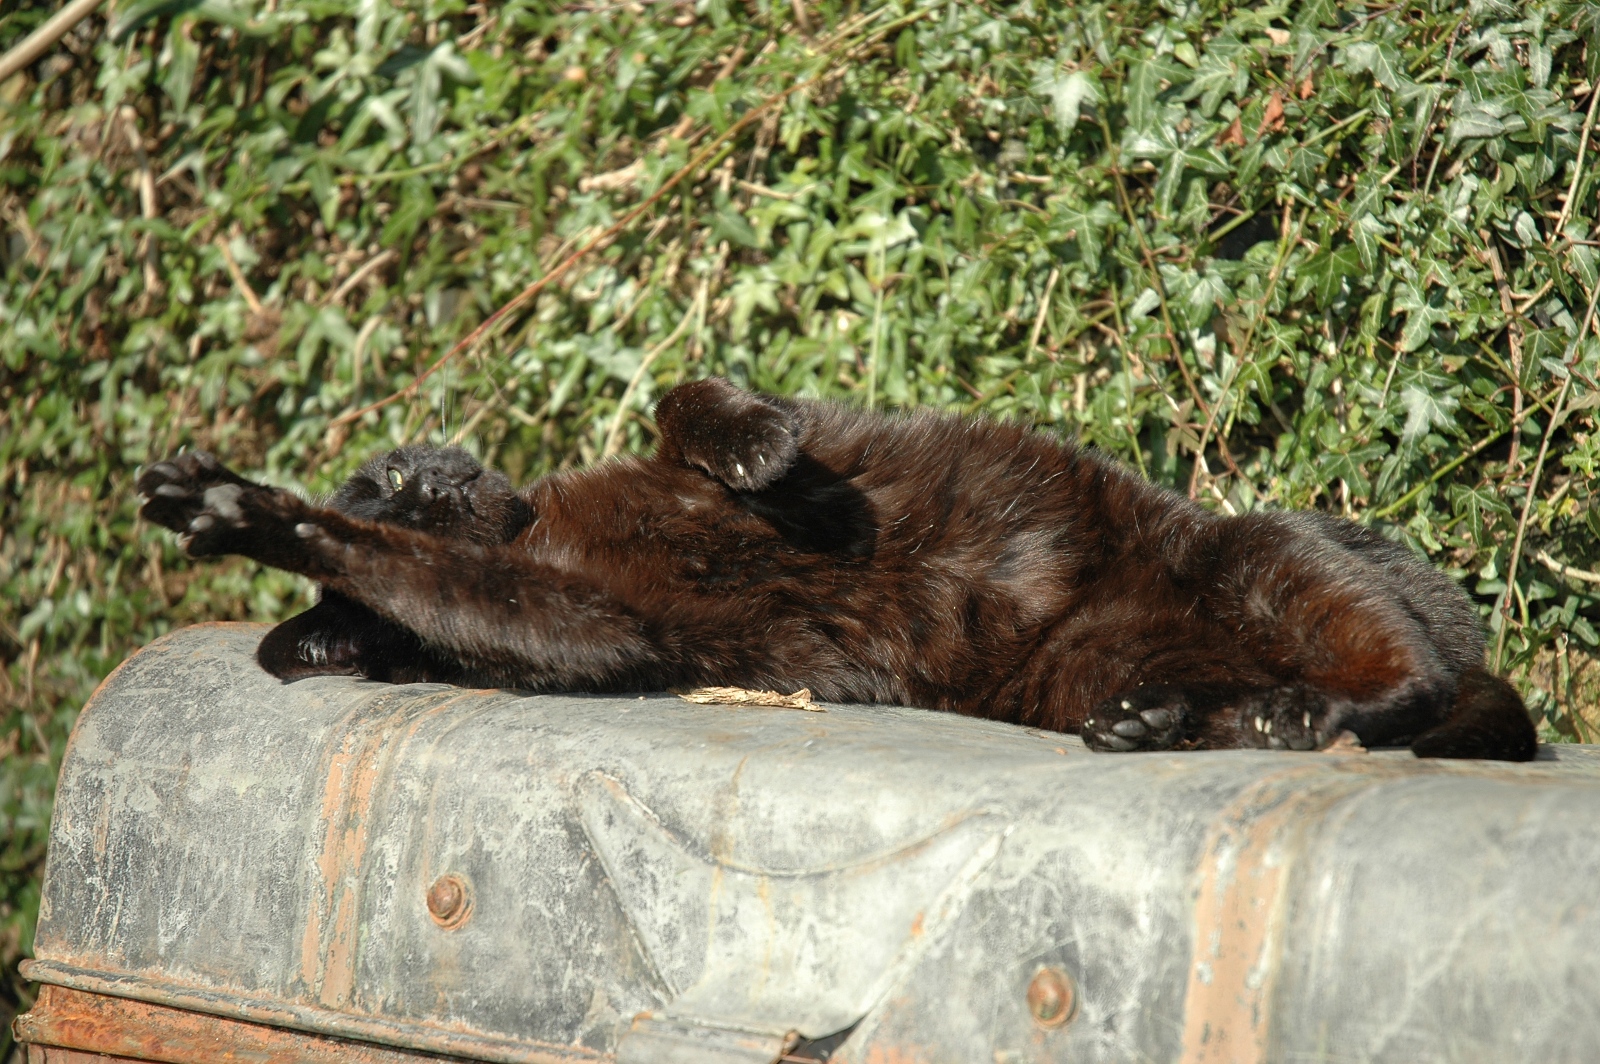 Boron stretching in the sun